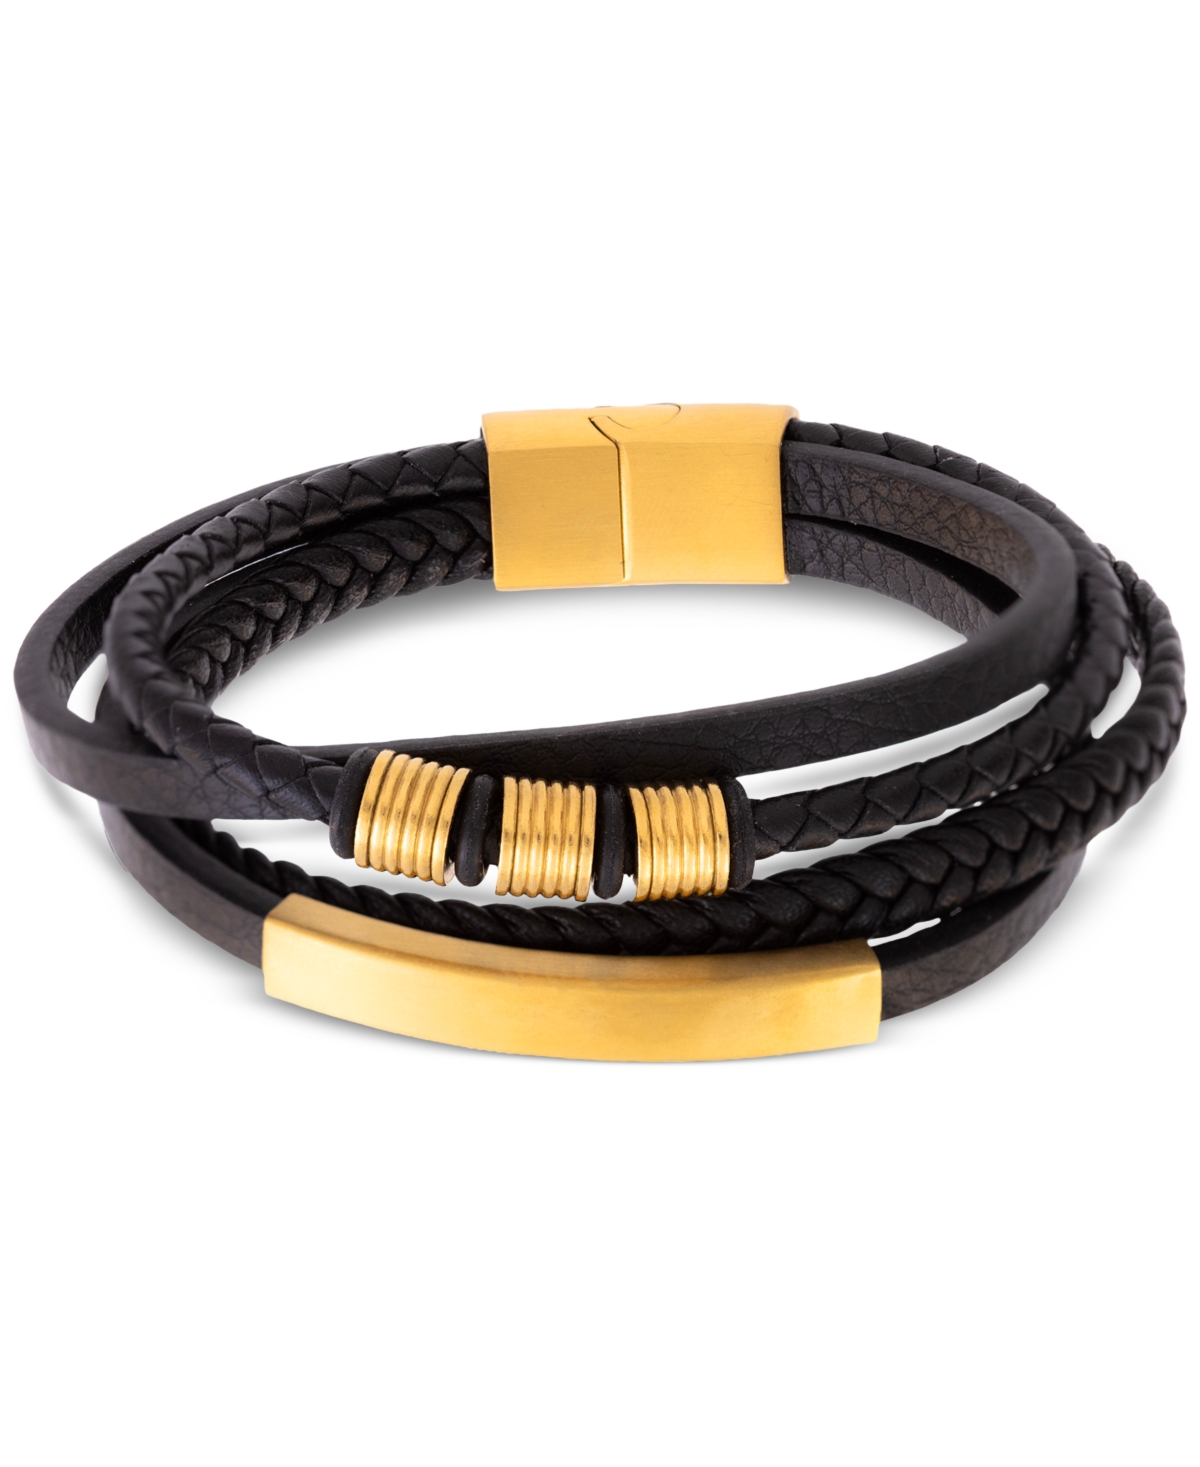 Smith Men's Multirow Black Fiber Bracelet in Gold-Tone Ion-Plated Stainless Steel - Black